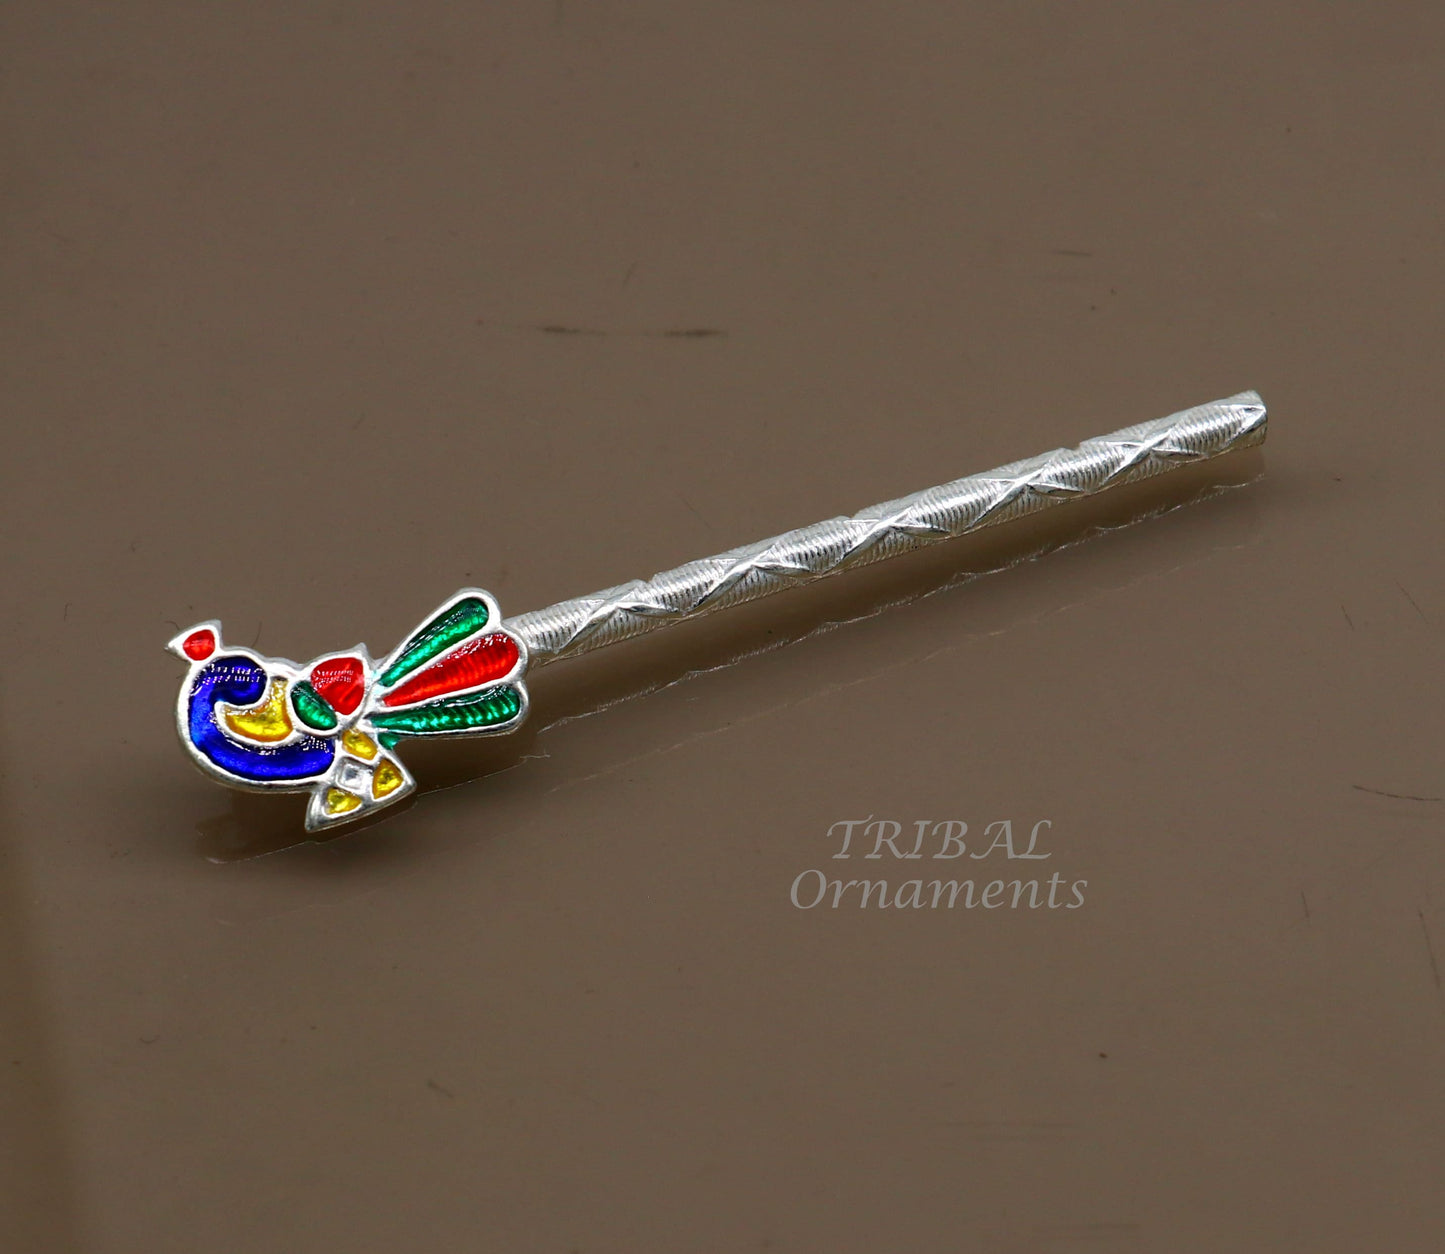 6.5cm sterling silver handmade idol baby Krishna small tiny flute, silver bansuri, laddu gopala flute, little krishna flute puja art su812 - TRIBAL ORNAMENTS